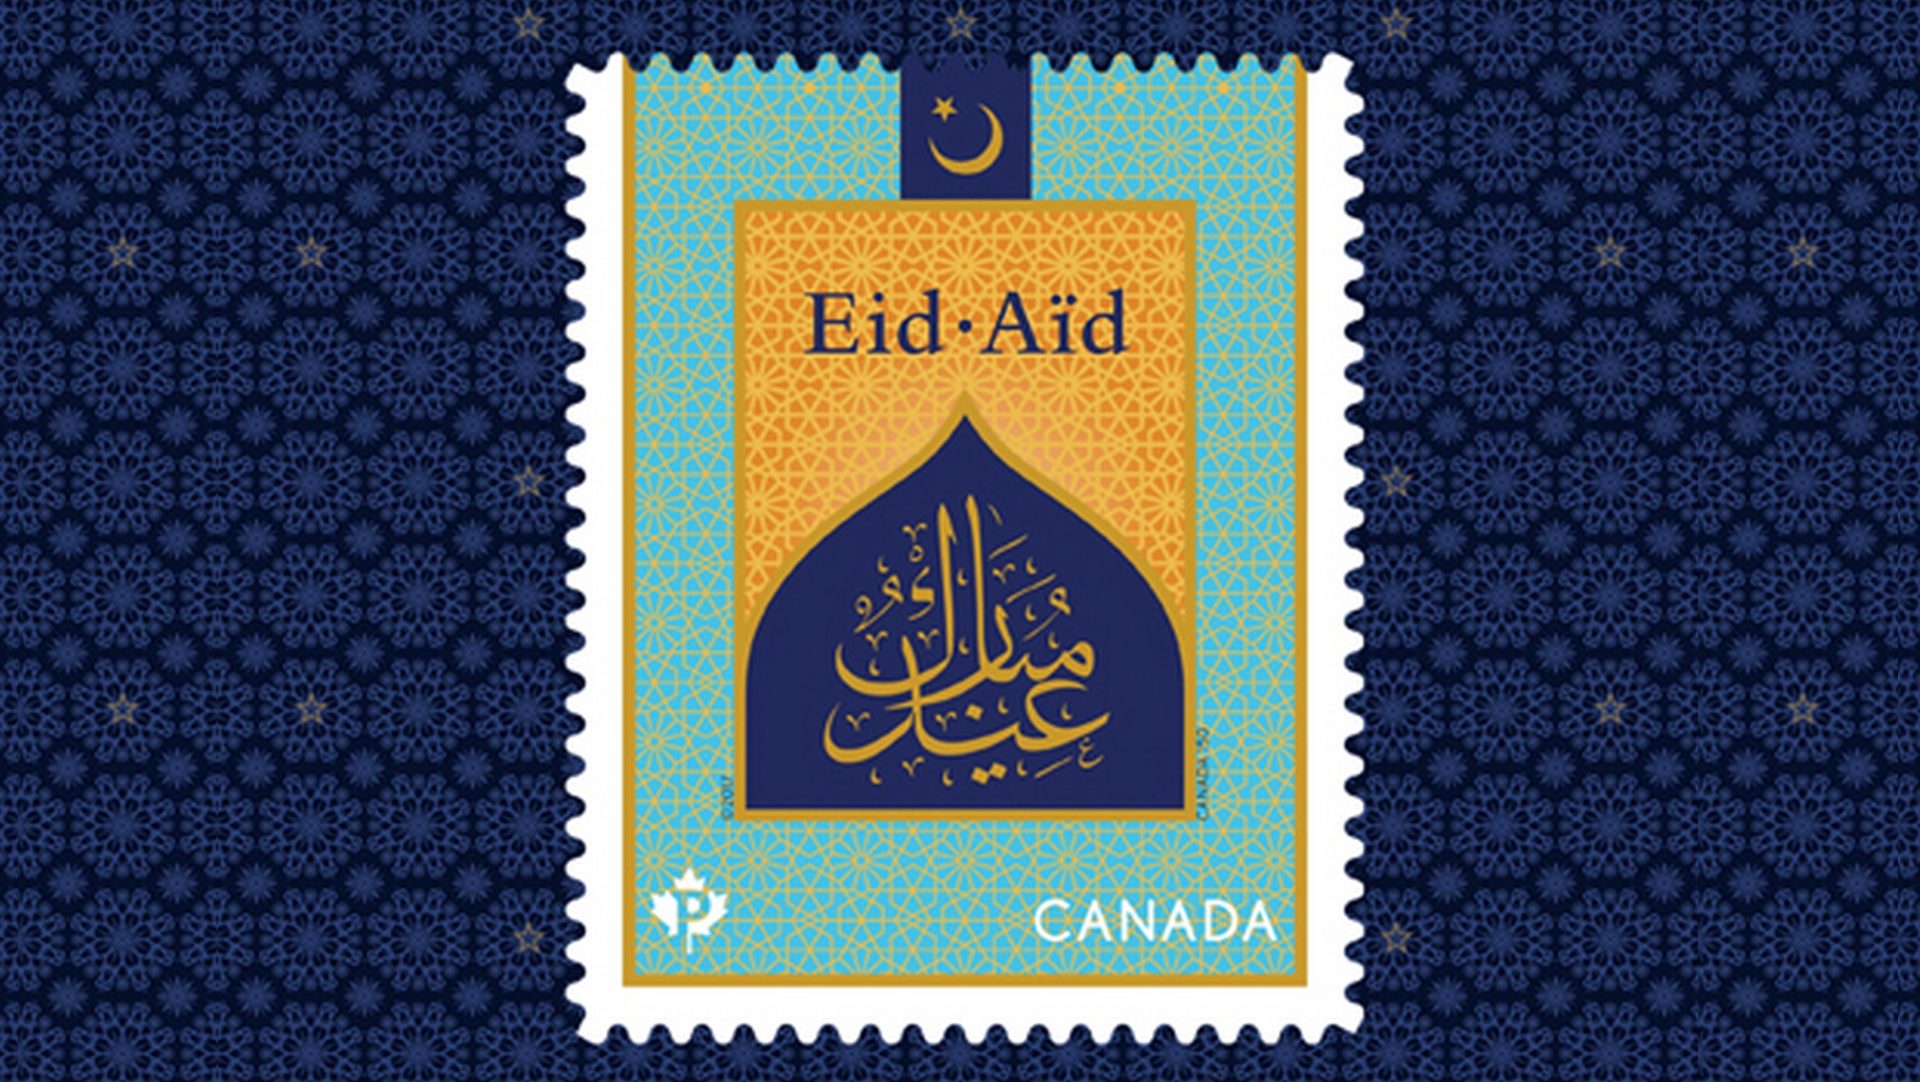 Postes Canada consacre un premier timbre à l'islam (photo Postes Canada)